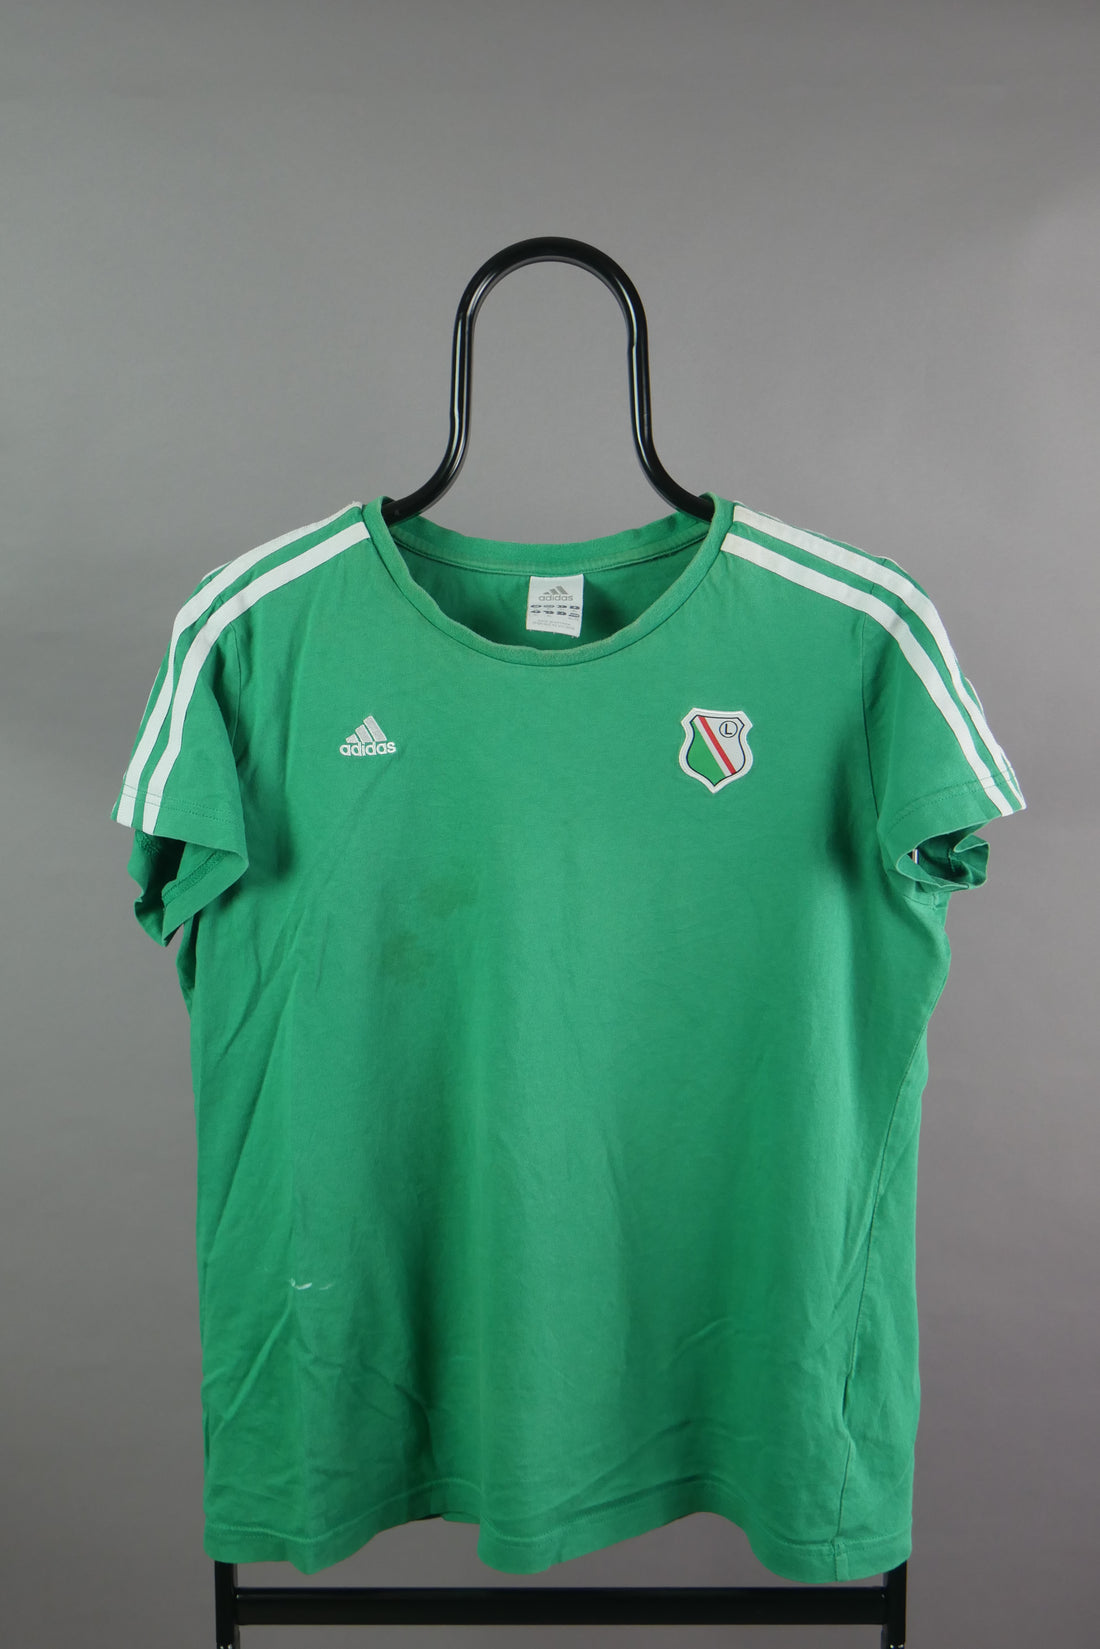 The Adidas 2011 T-Shirt (XL)